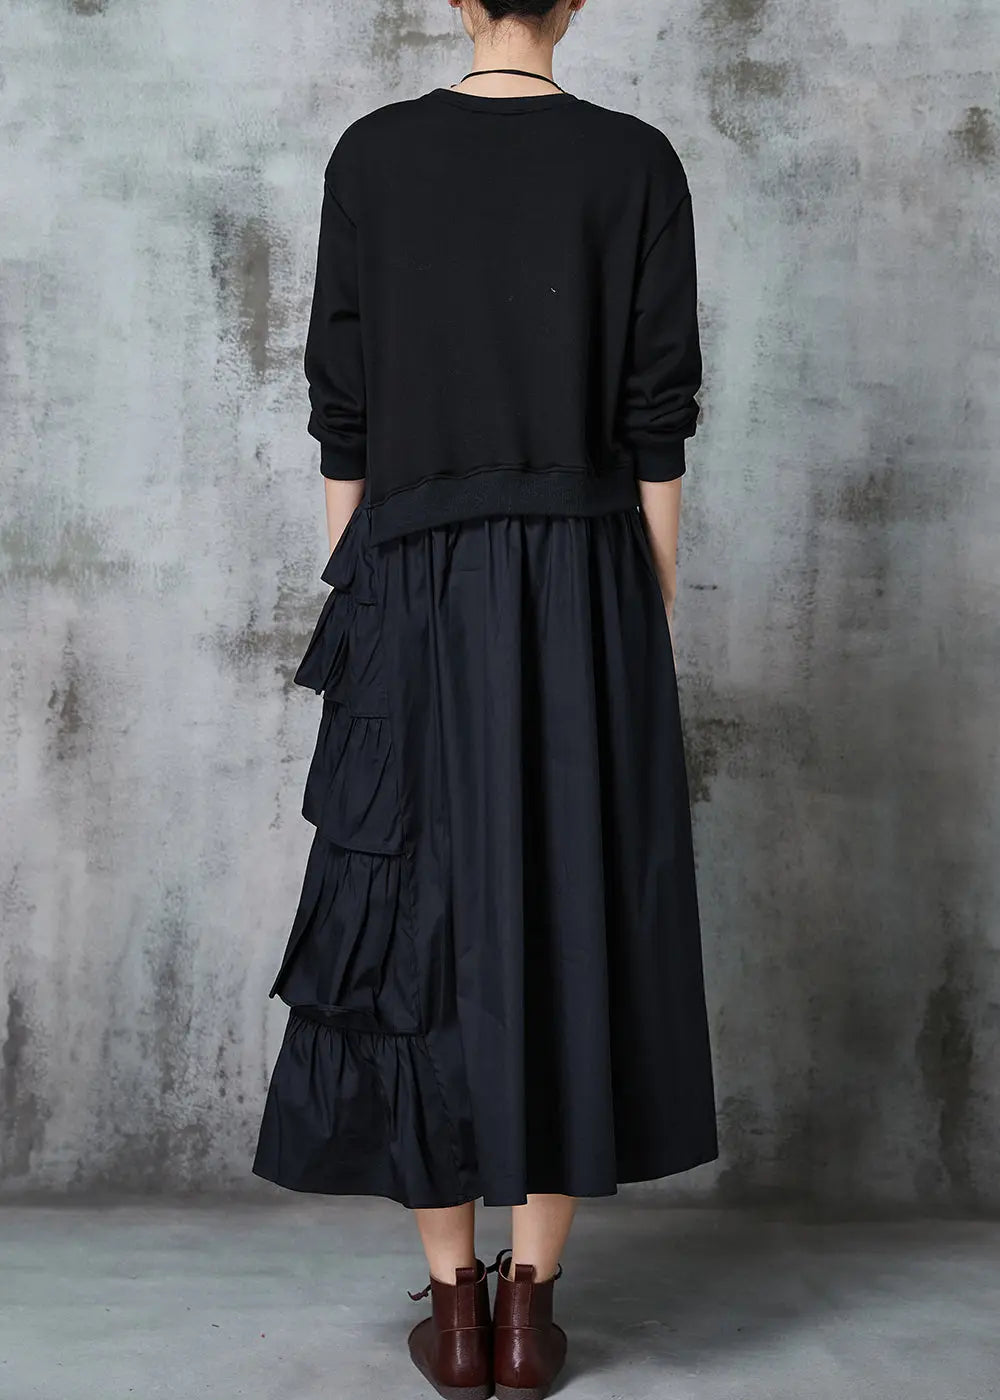 Black Patchwork Cotton Sweatshirt Dress Layered Ruffled Spring Ada Fashion